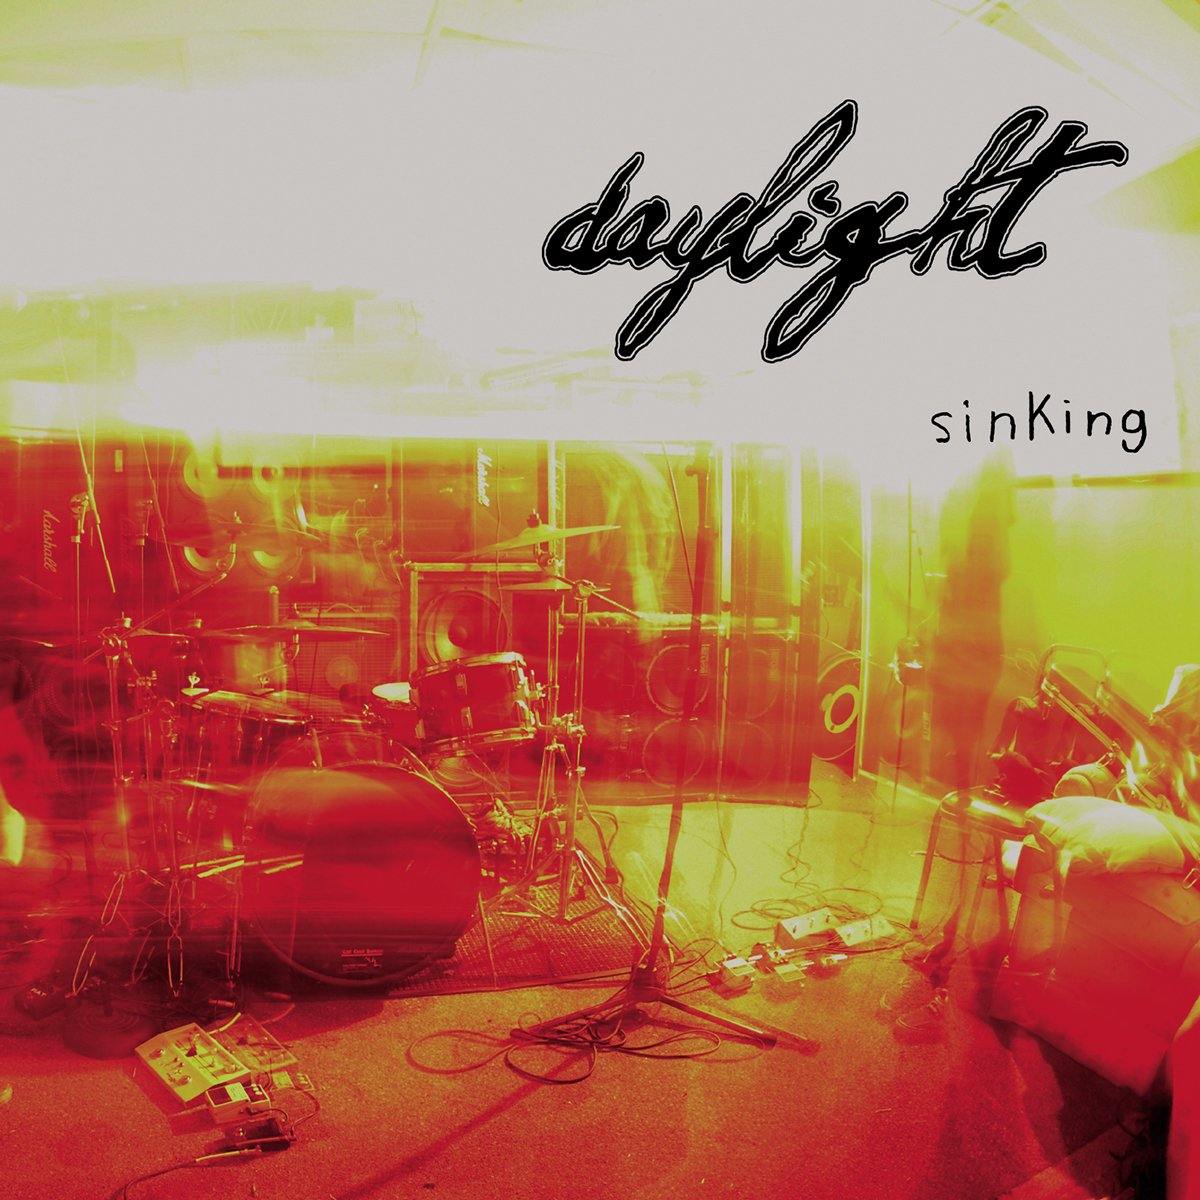 Buy – Daylight "Sinking" Digital Download – Band & Music Merch – Cold Cuts Merch